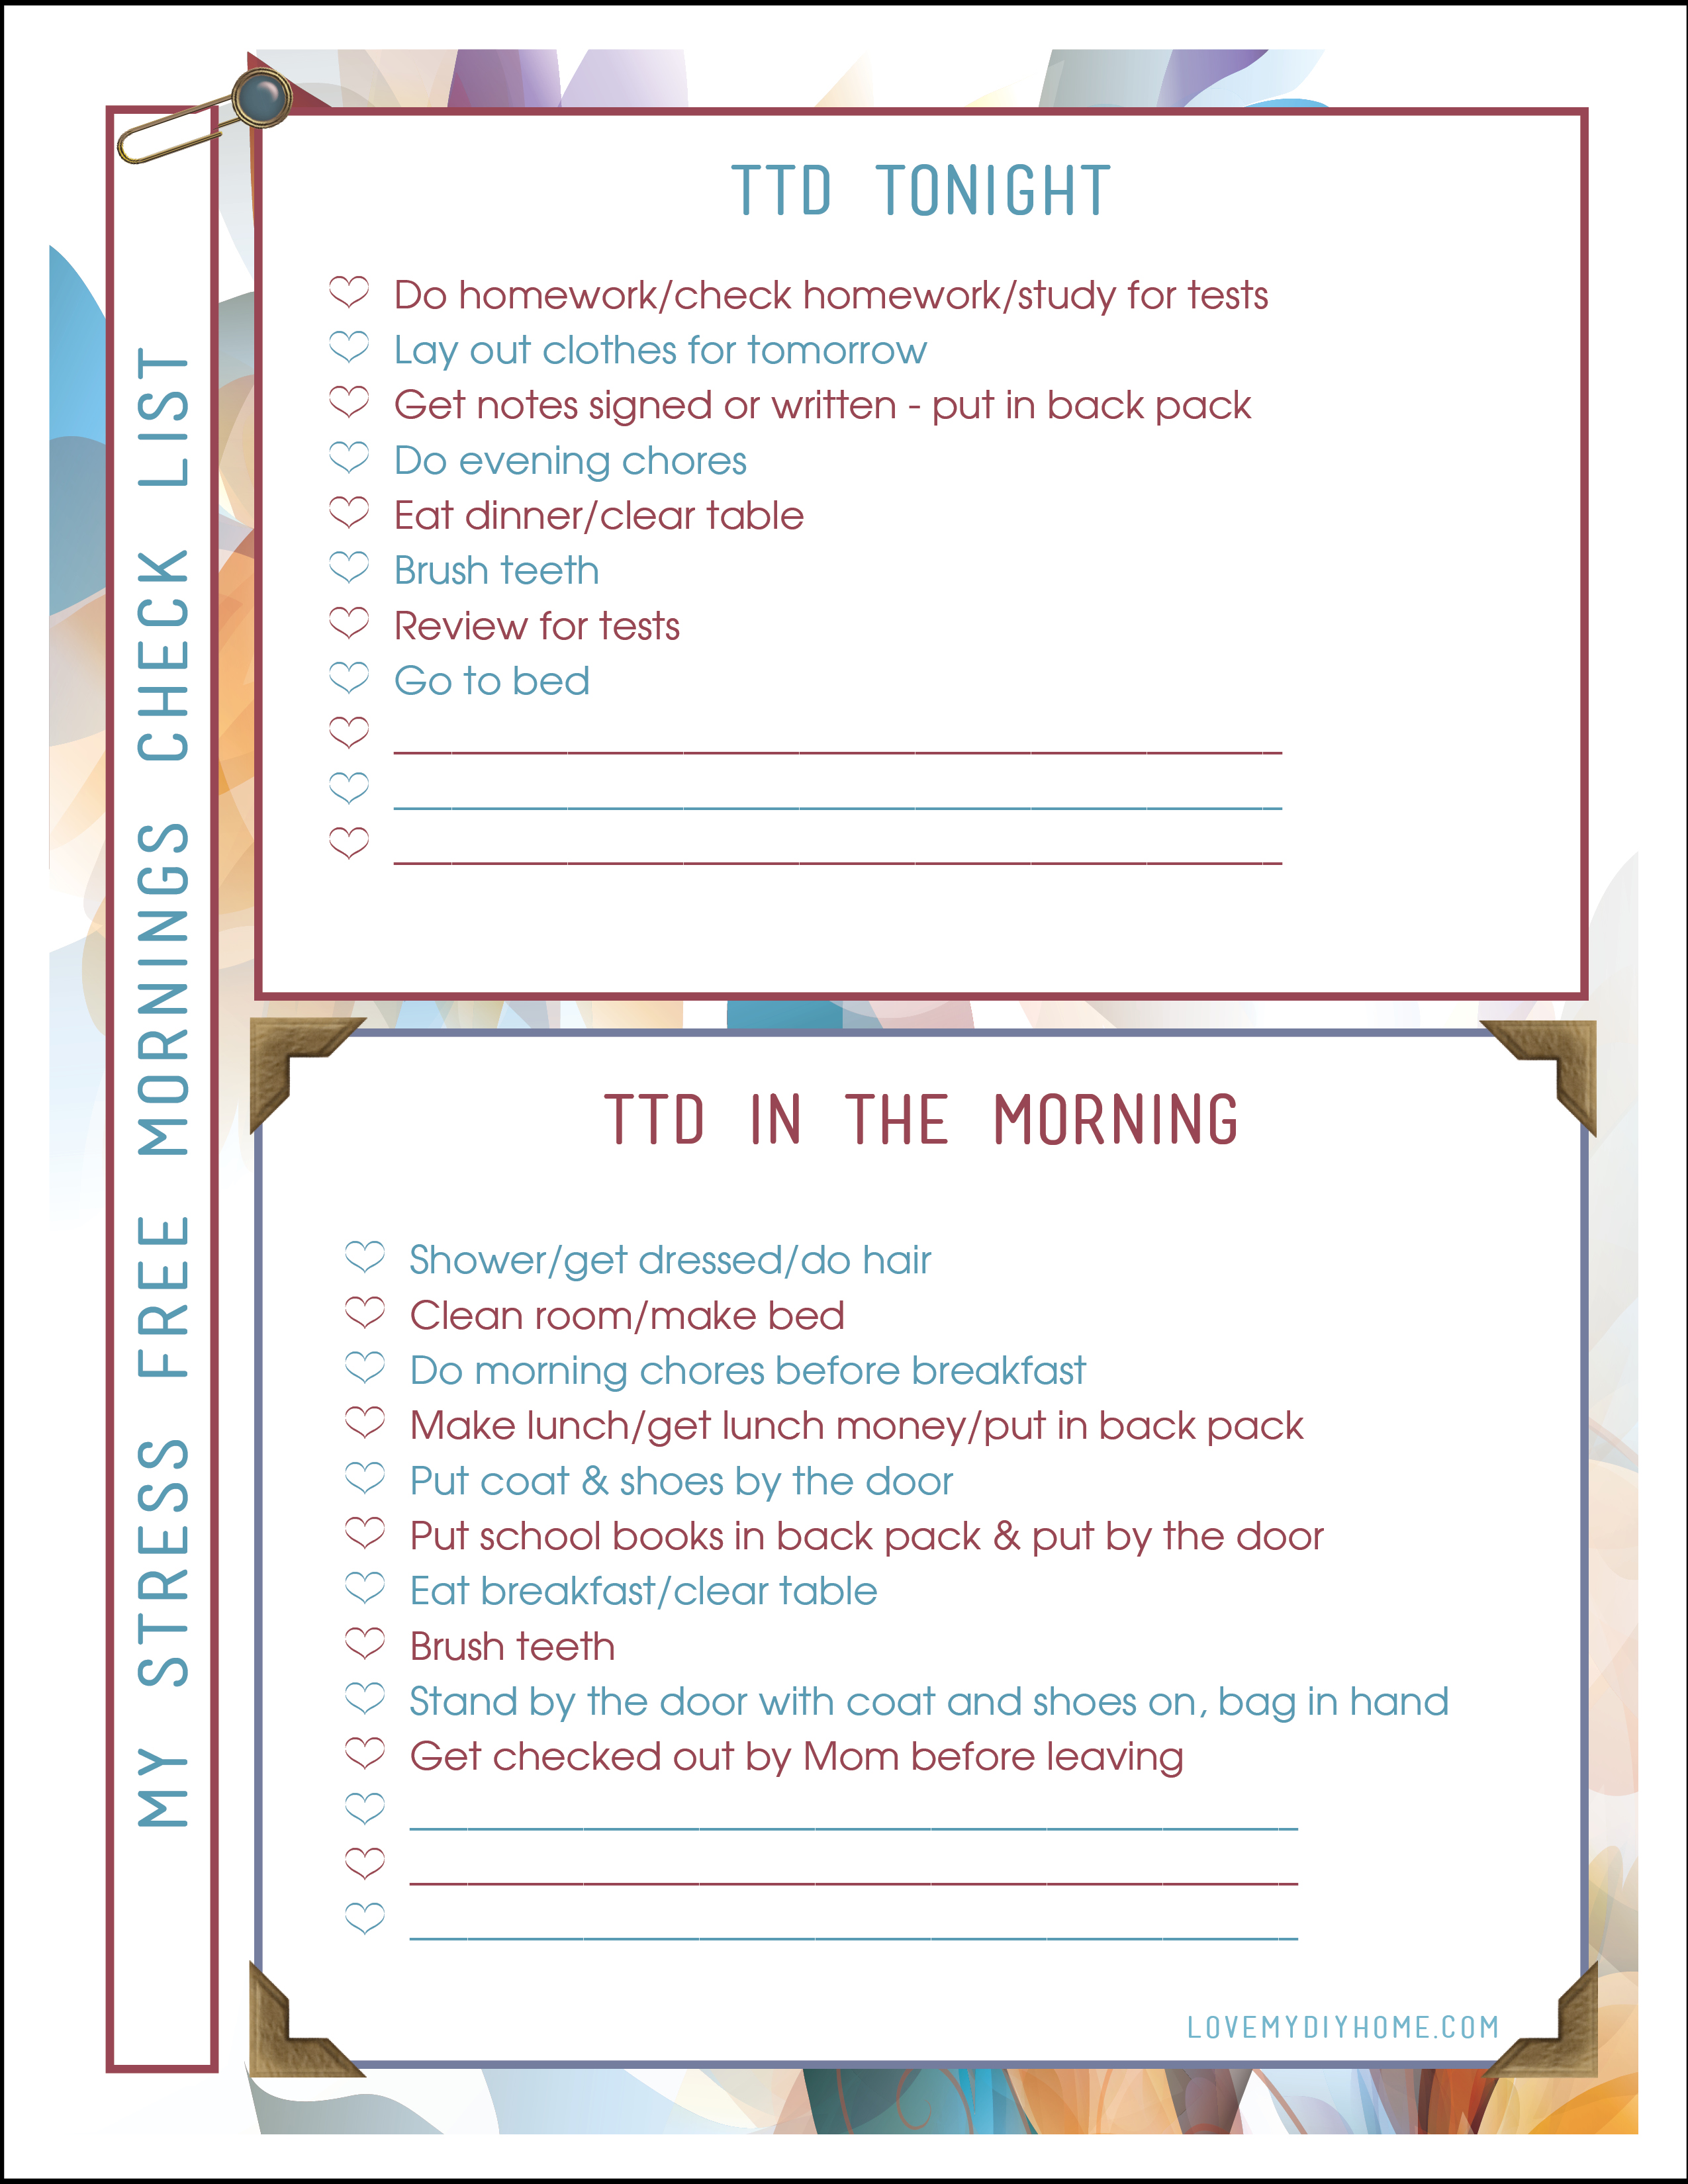 Stress Free Mornings checklist